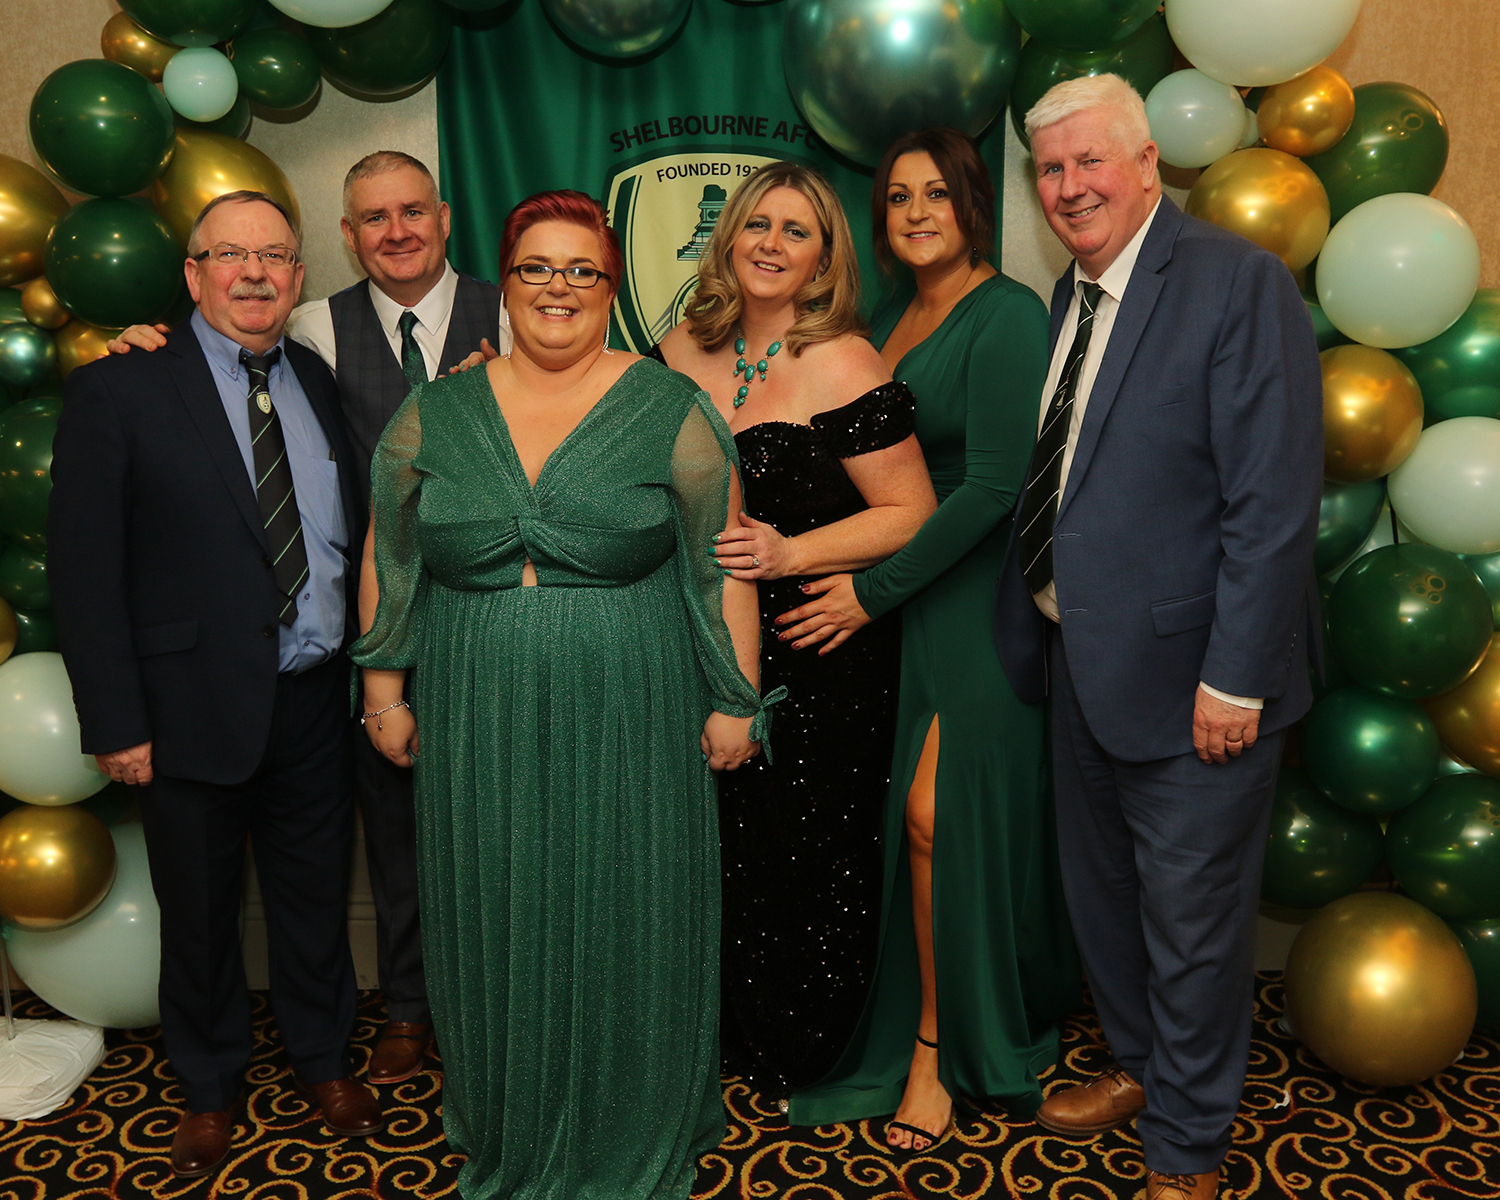 Shelbourne AFC 50 Shades of Green Fundraiser Lights Up Limerick